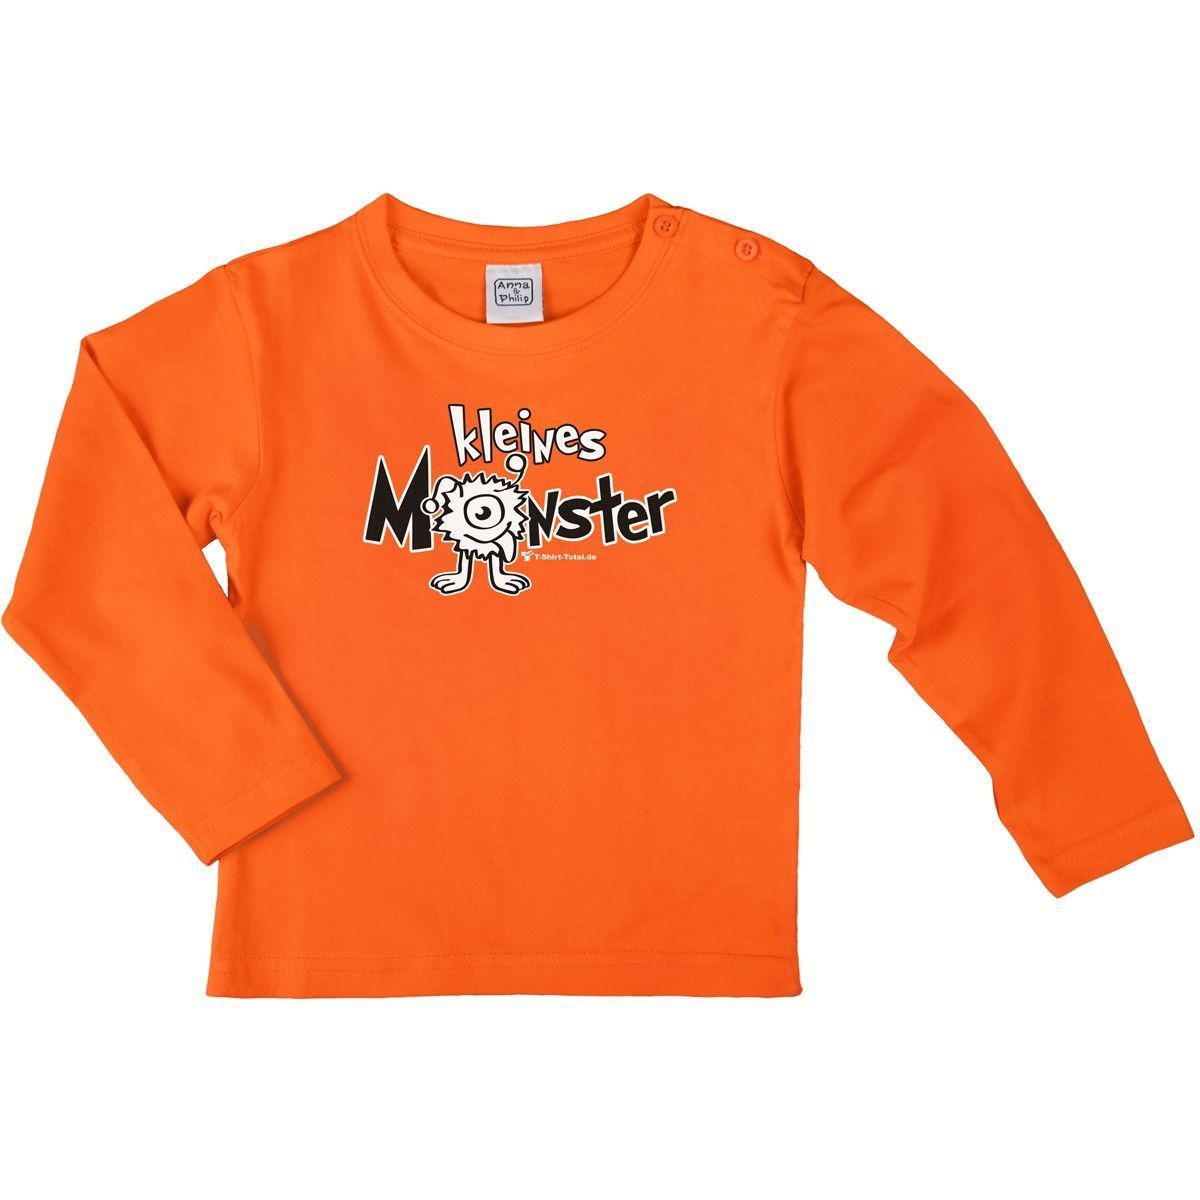 Kleines Monster Kinder Langarm Shirt orange 110 / 116